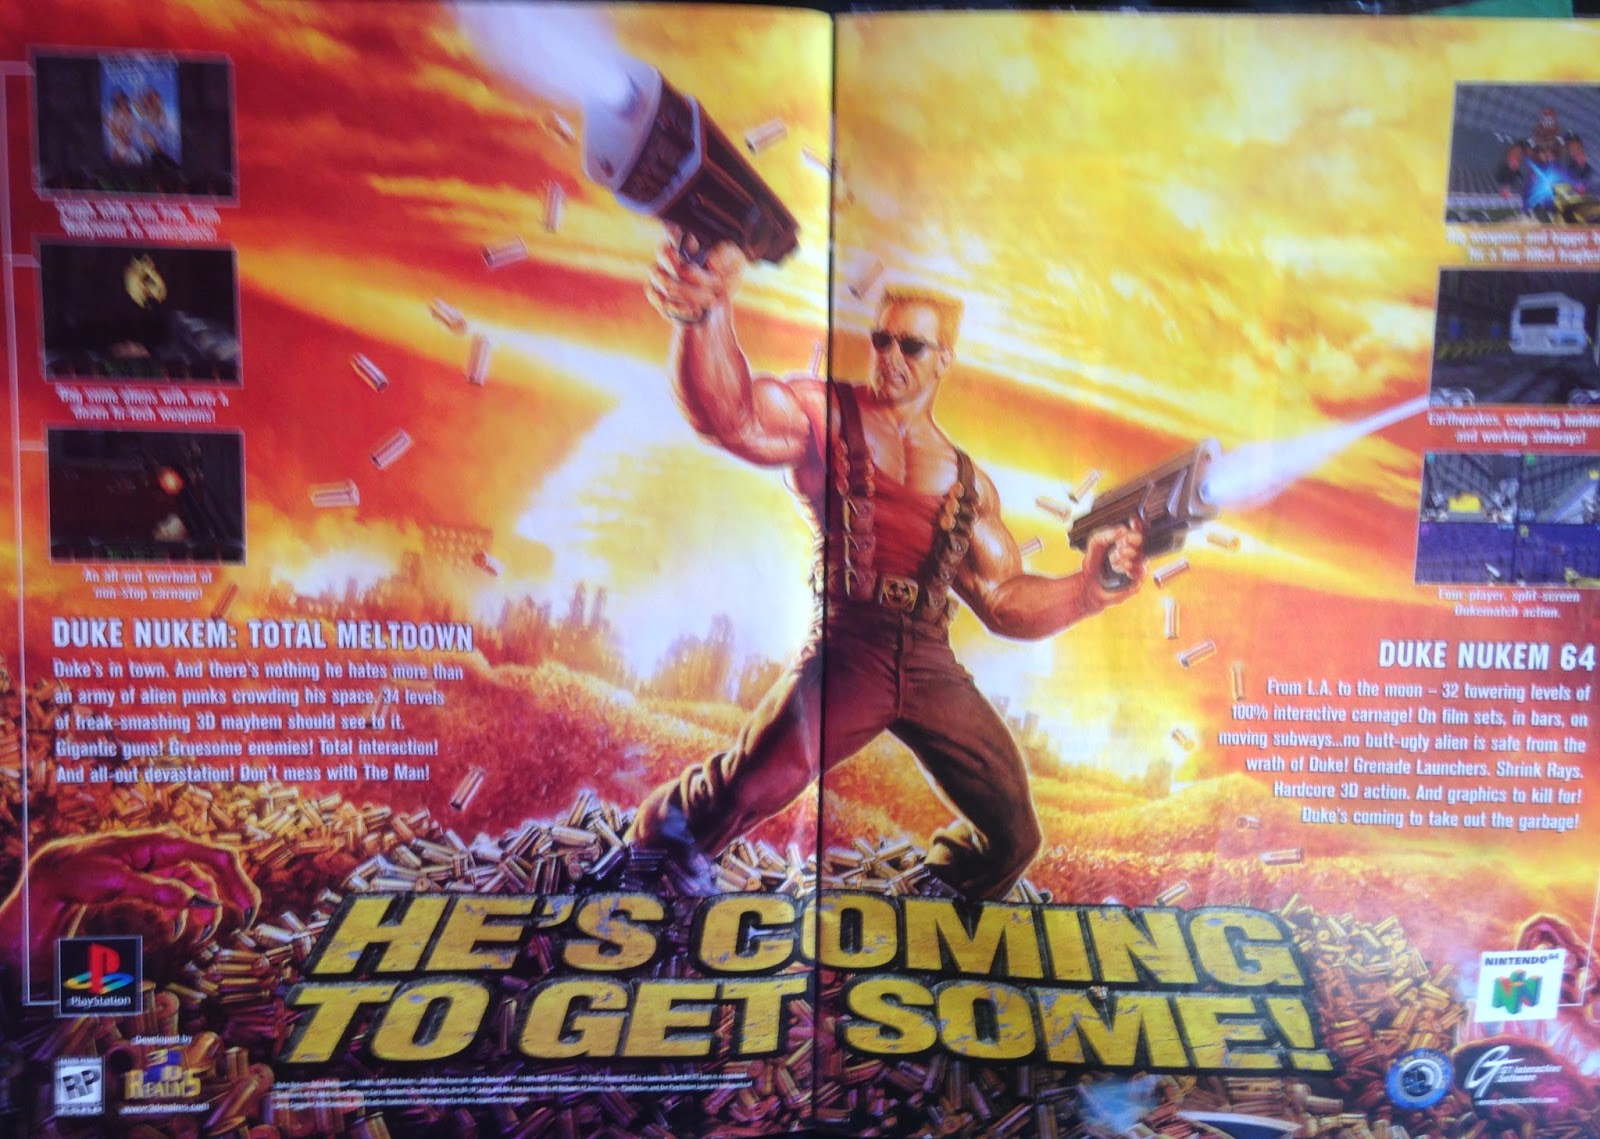 WWF MAGAZINE - JANUARY 1998 -  Duke Nukem game advert